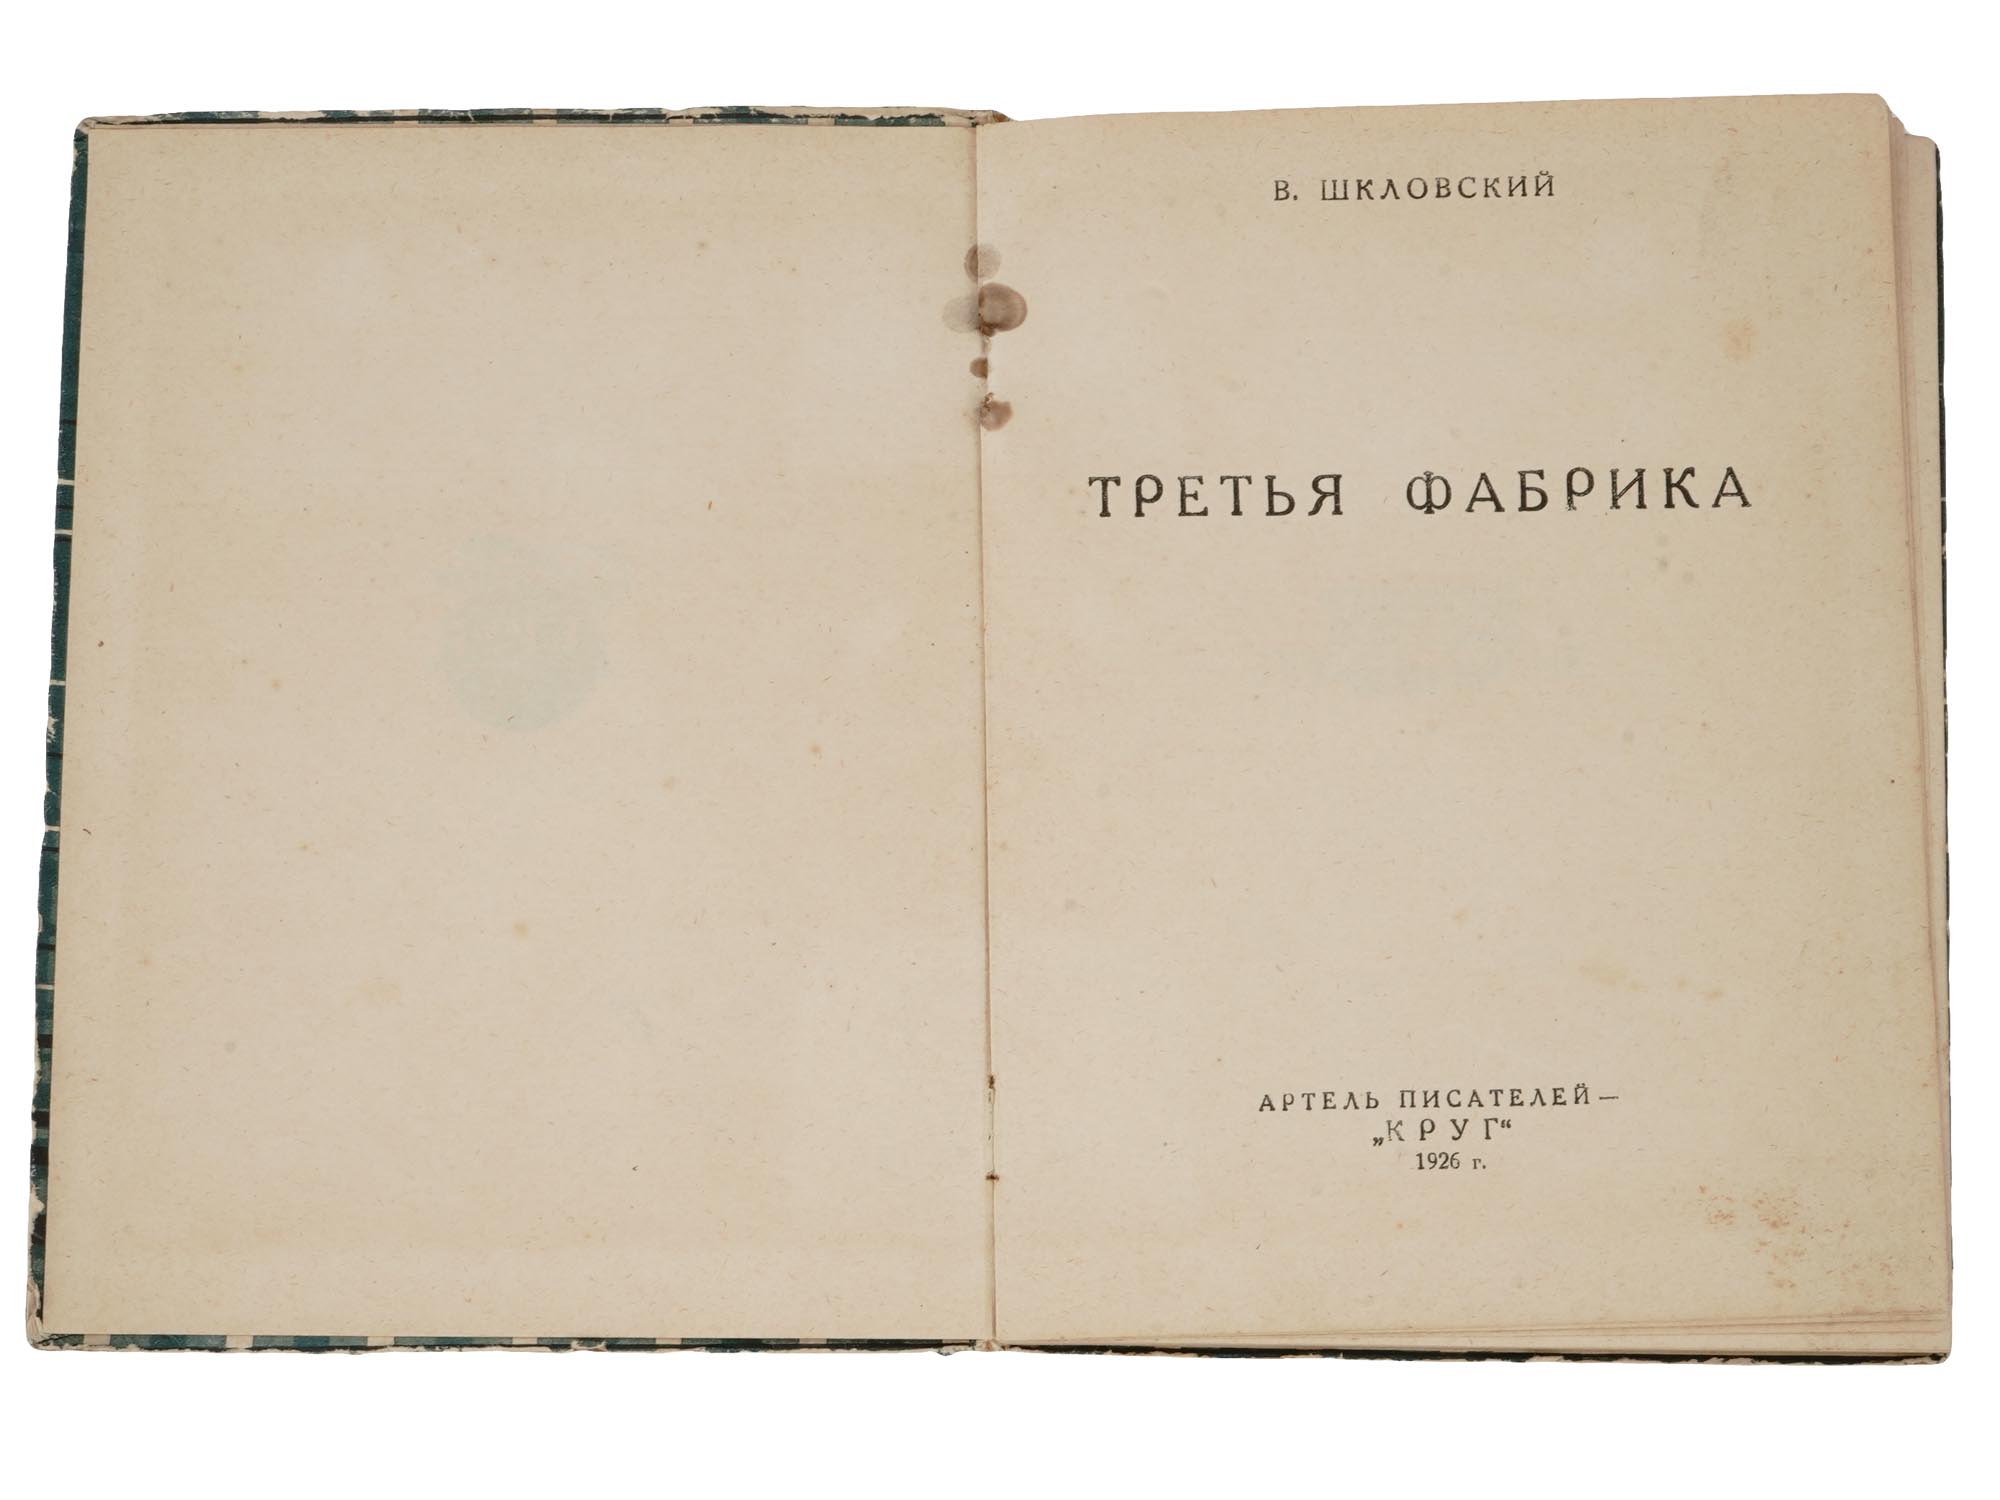 1920S RUSSIAN BOOKS BY VIKTOR SHKLOVSKY AND N. OGNEV PIC-2